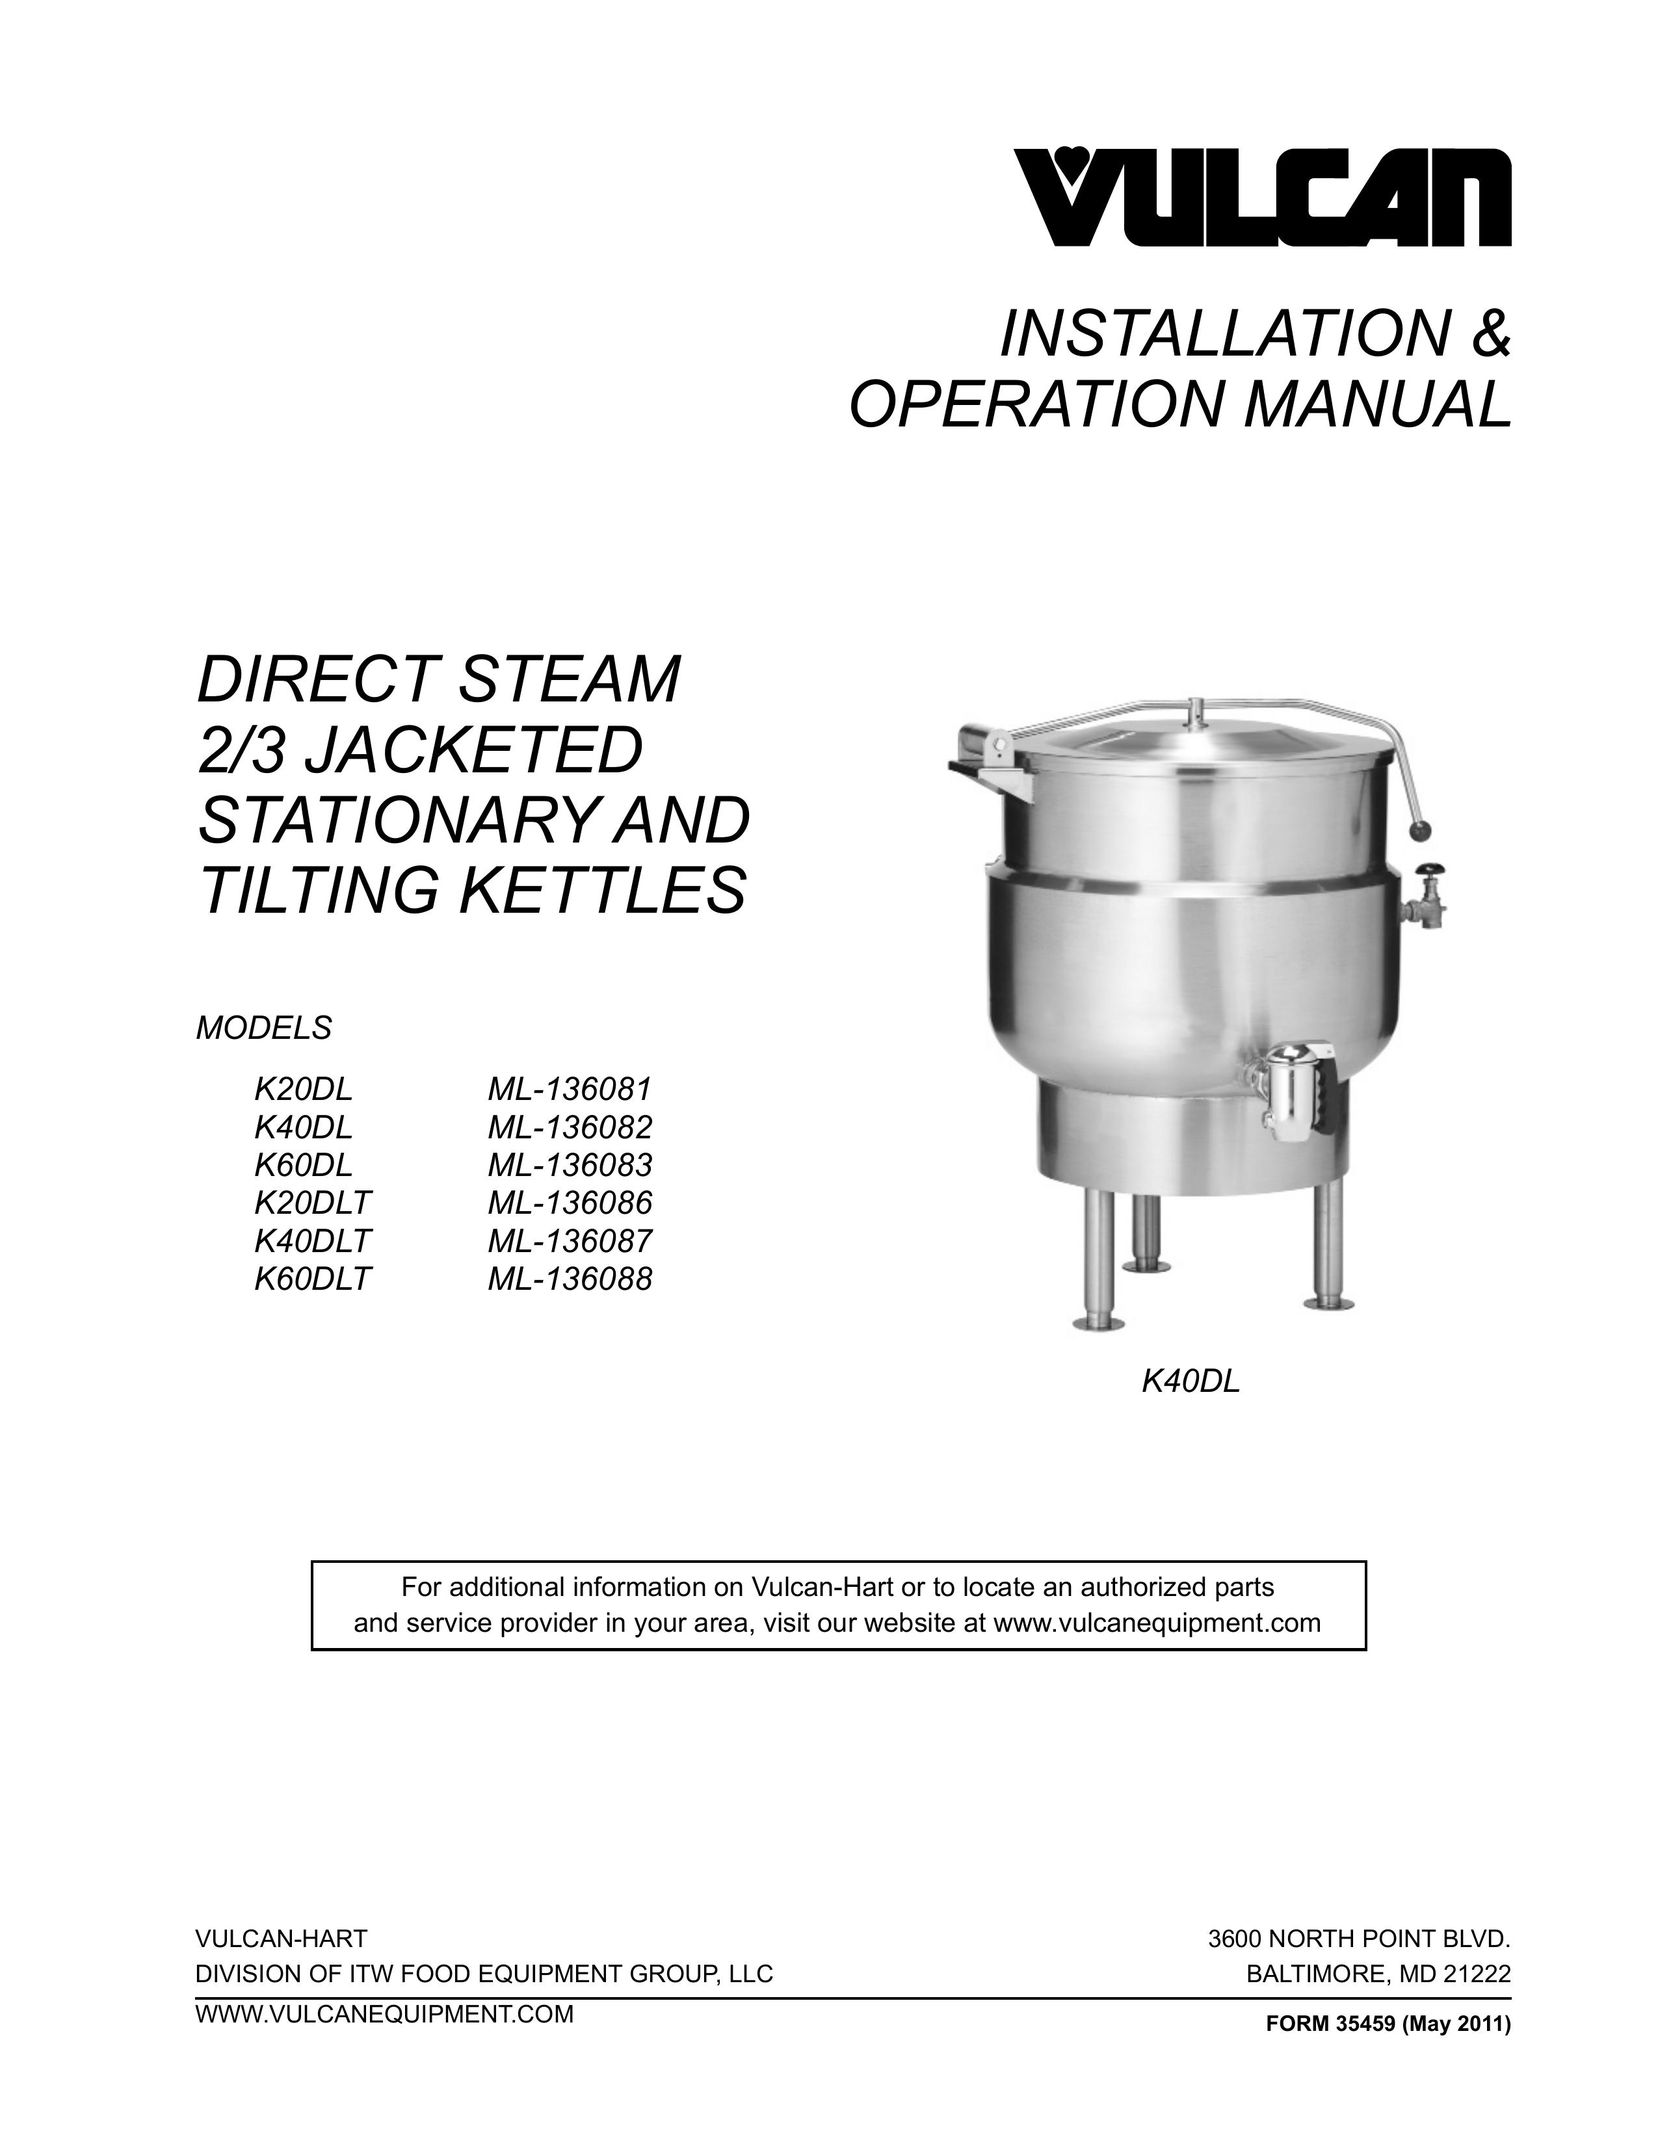 Vulcan-Hart K20DLT Hot Beverage Maker User Manual